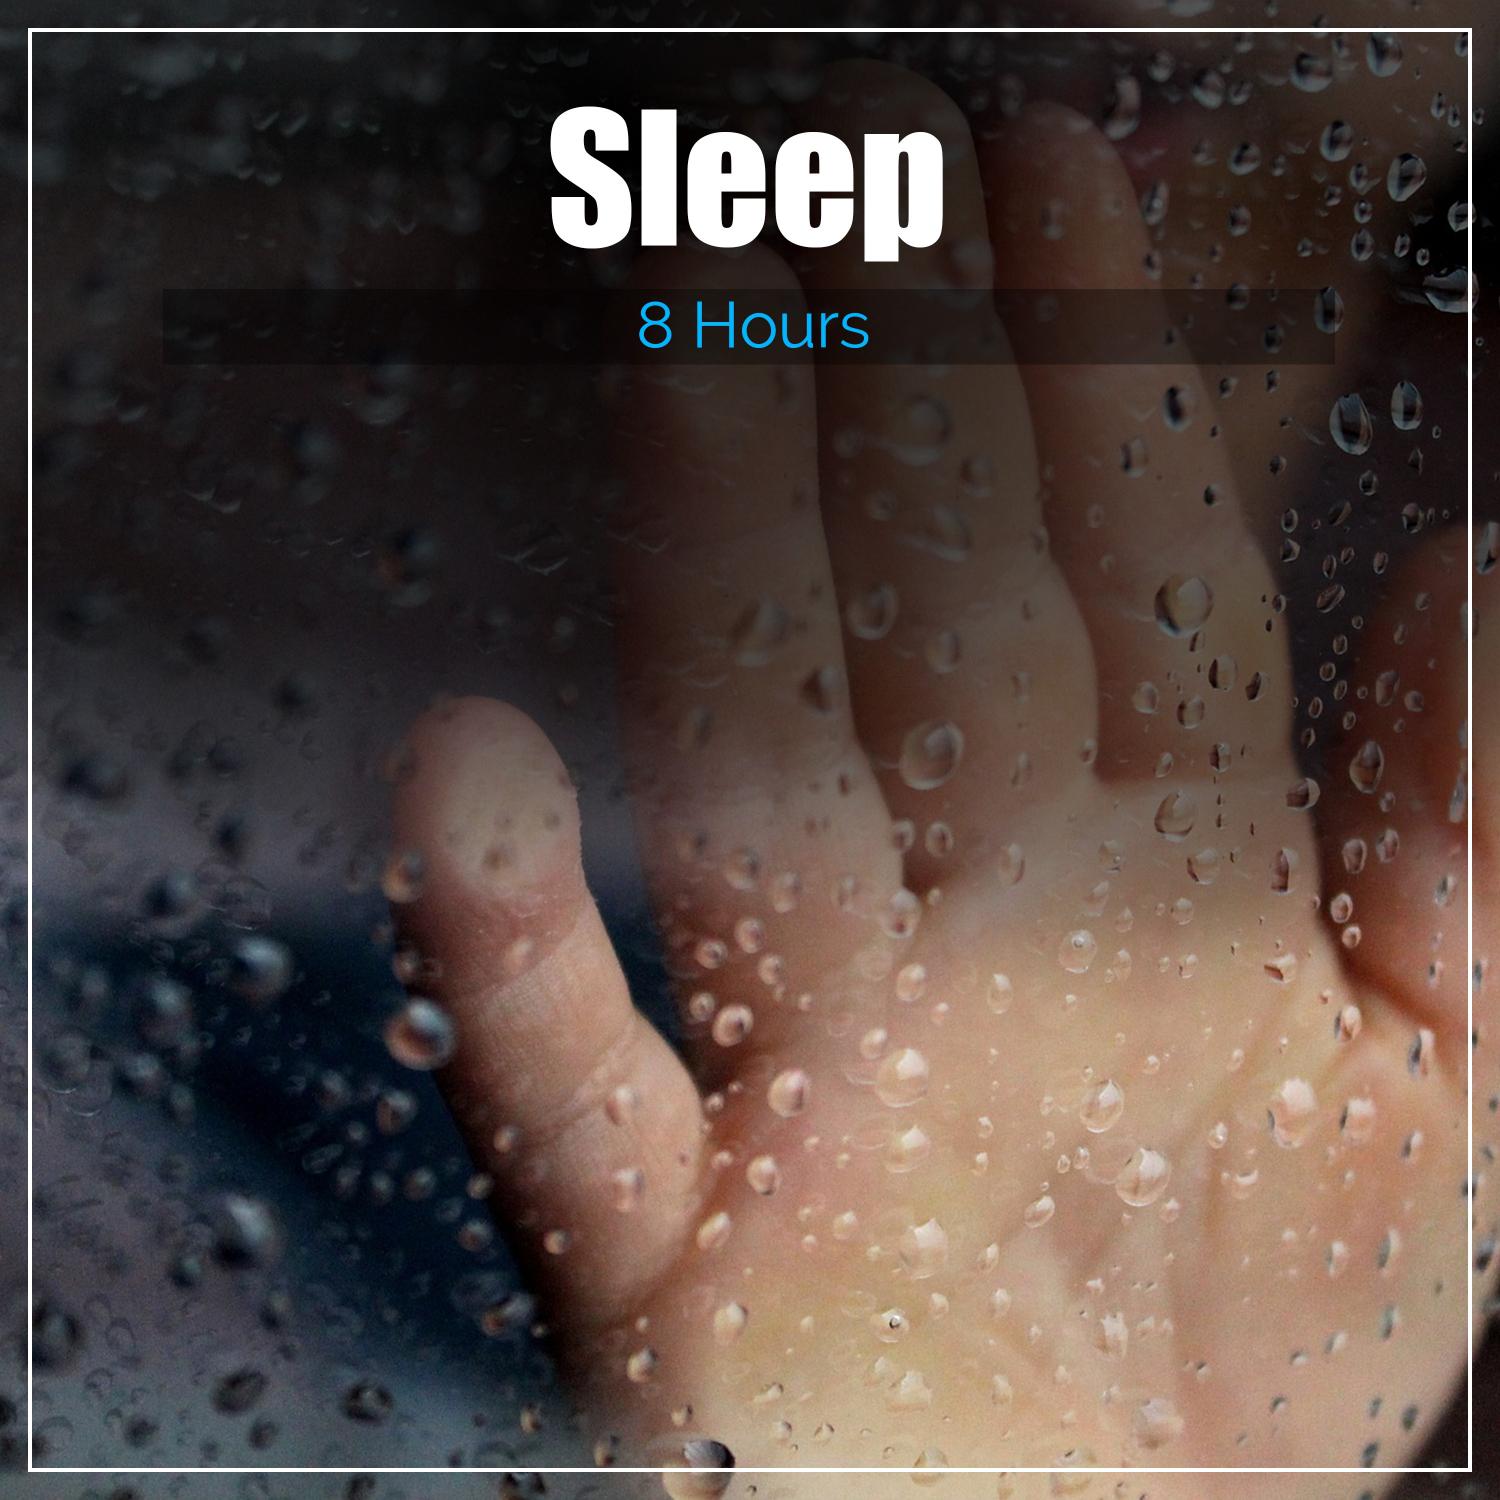 17 New Sleep Rain Sounds - Sleep 8 Hours, Awake Refreshed, Cure Insomnia, Baby Sleep Aid